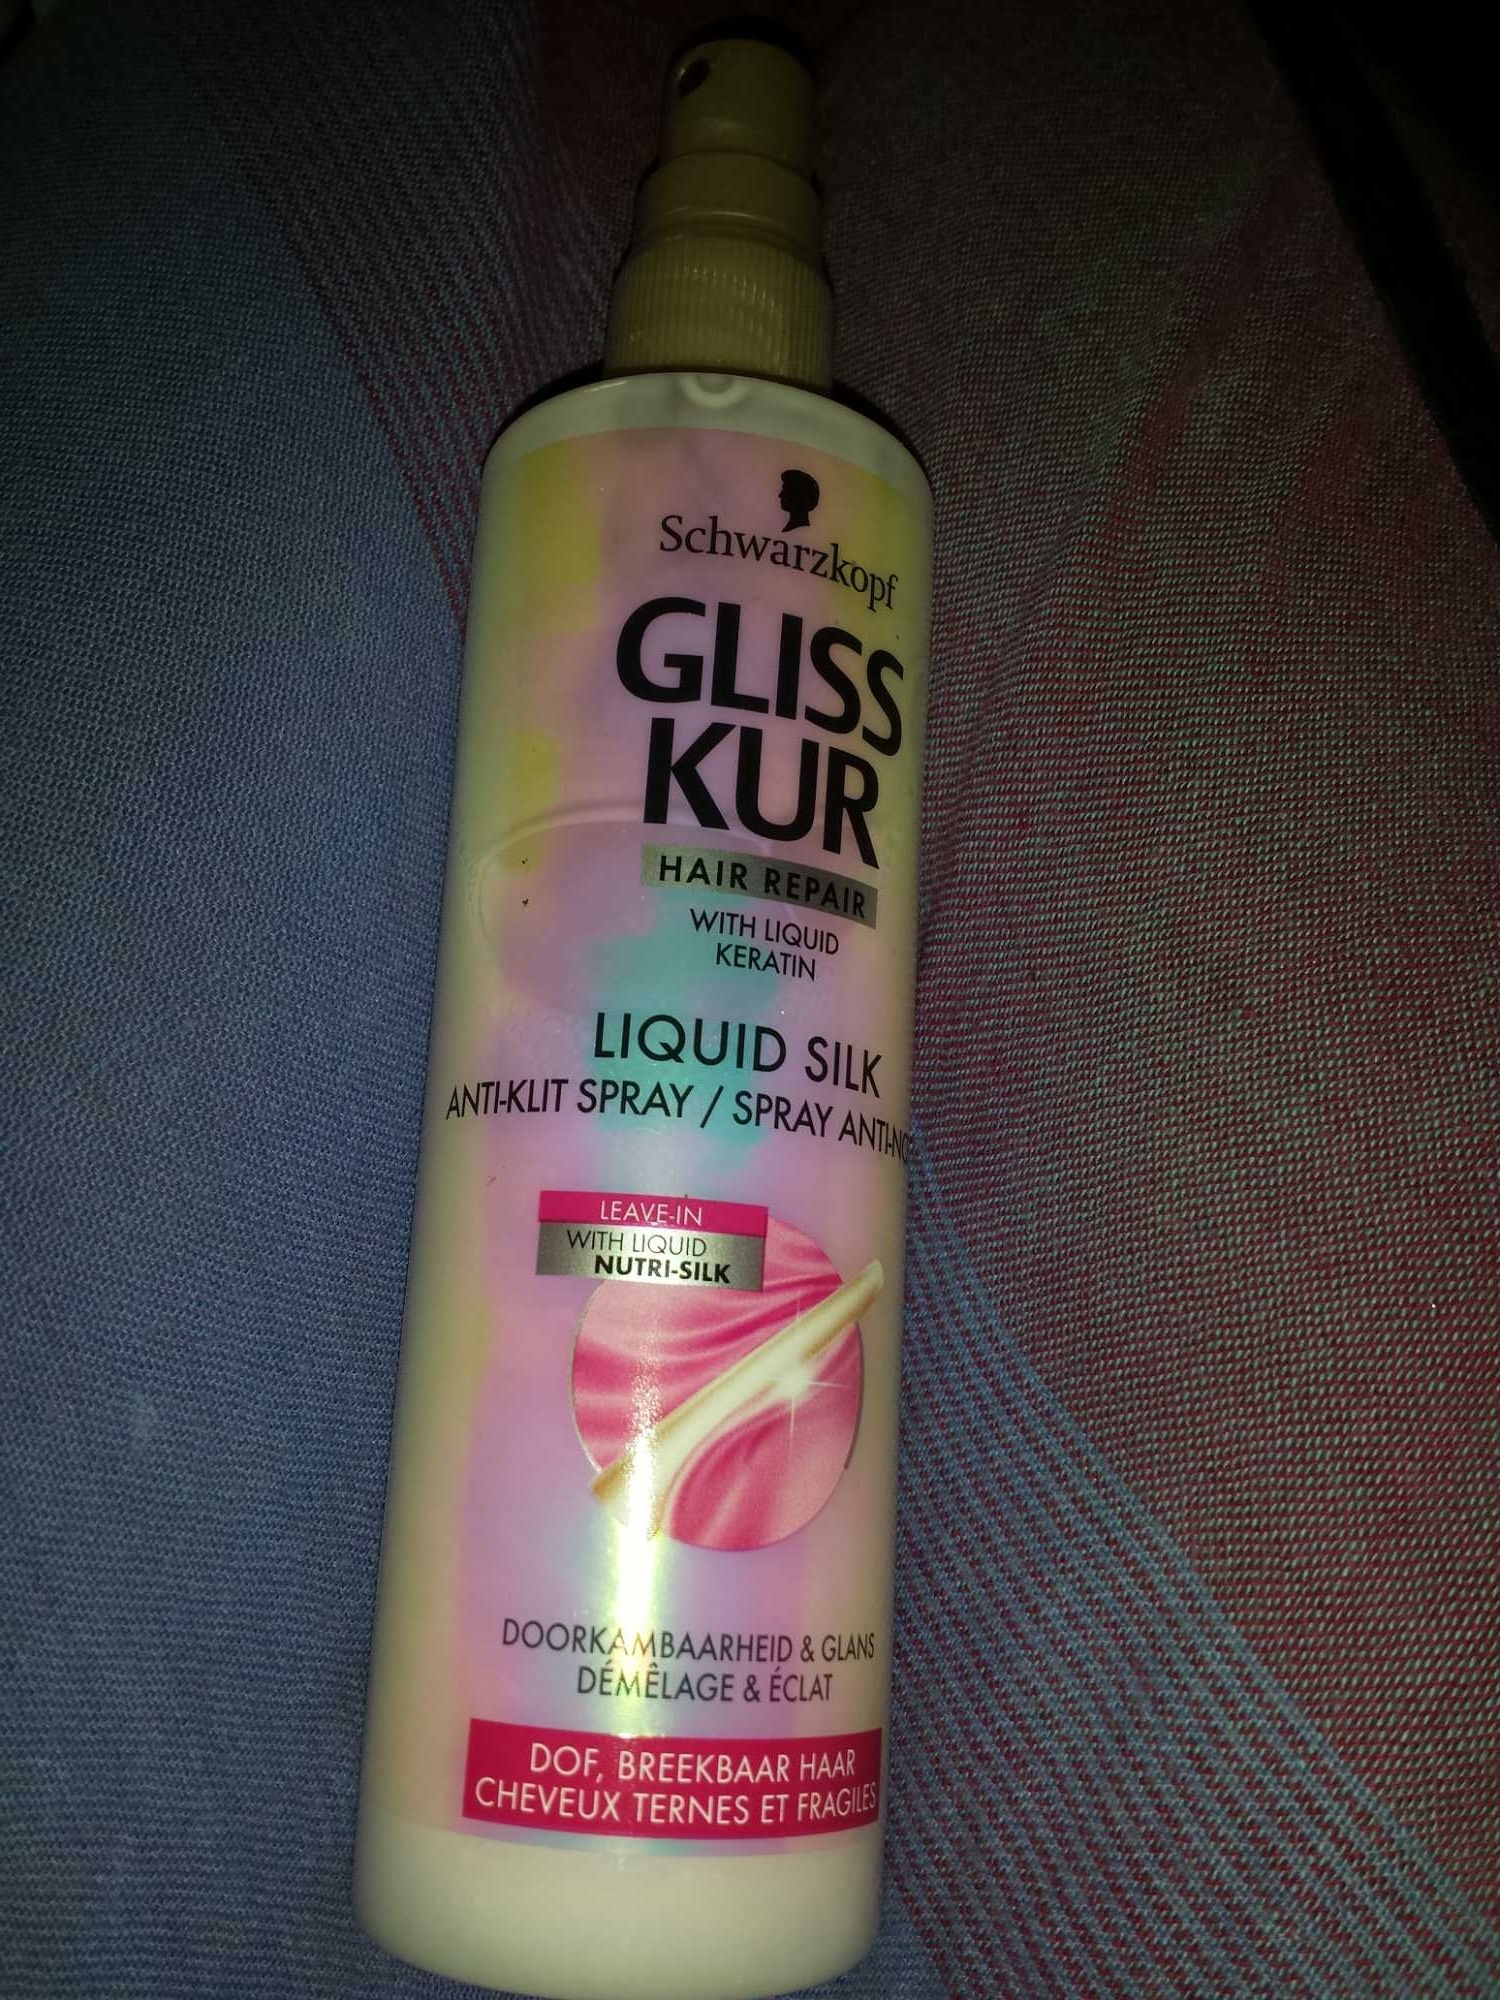 Liquid Silk - Product - en